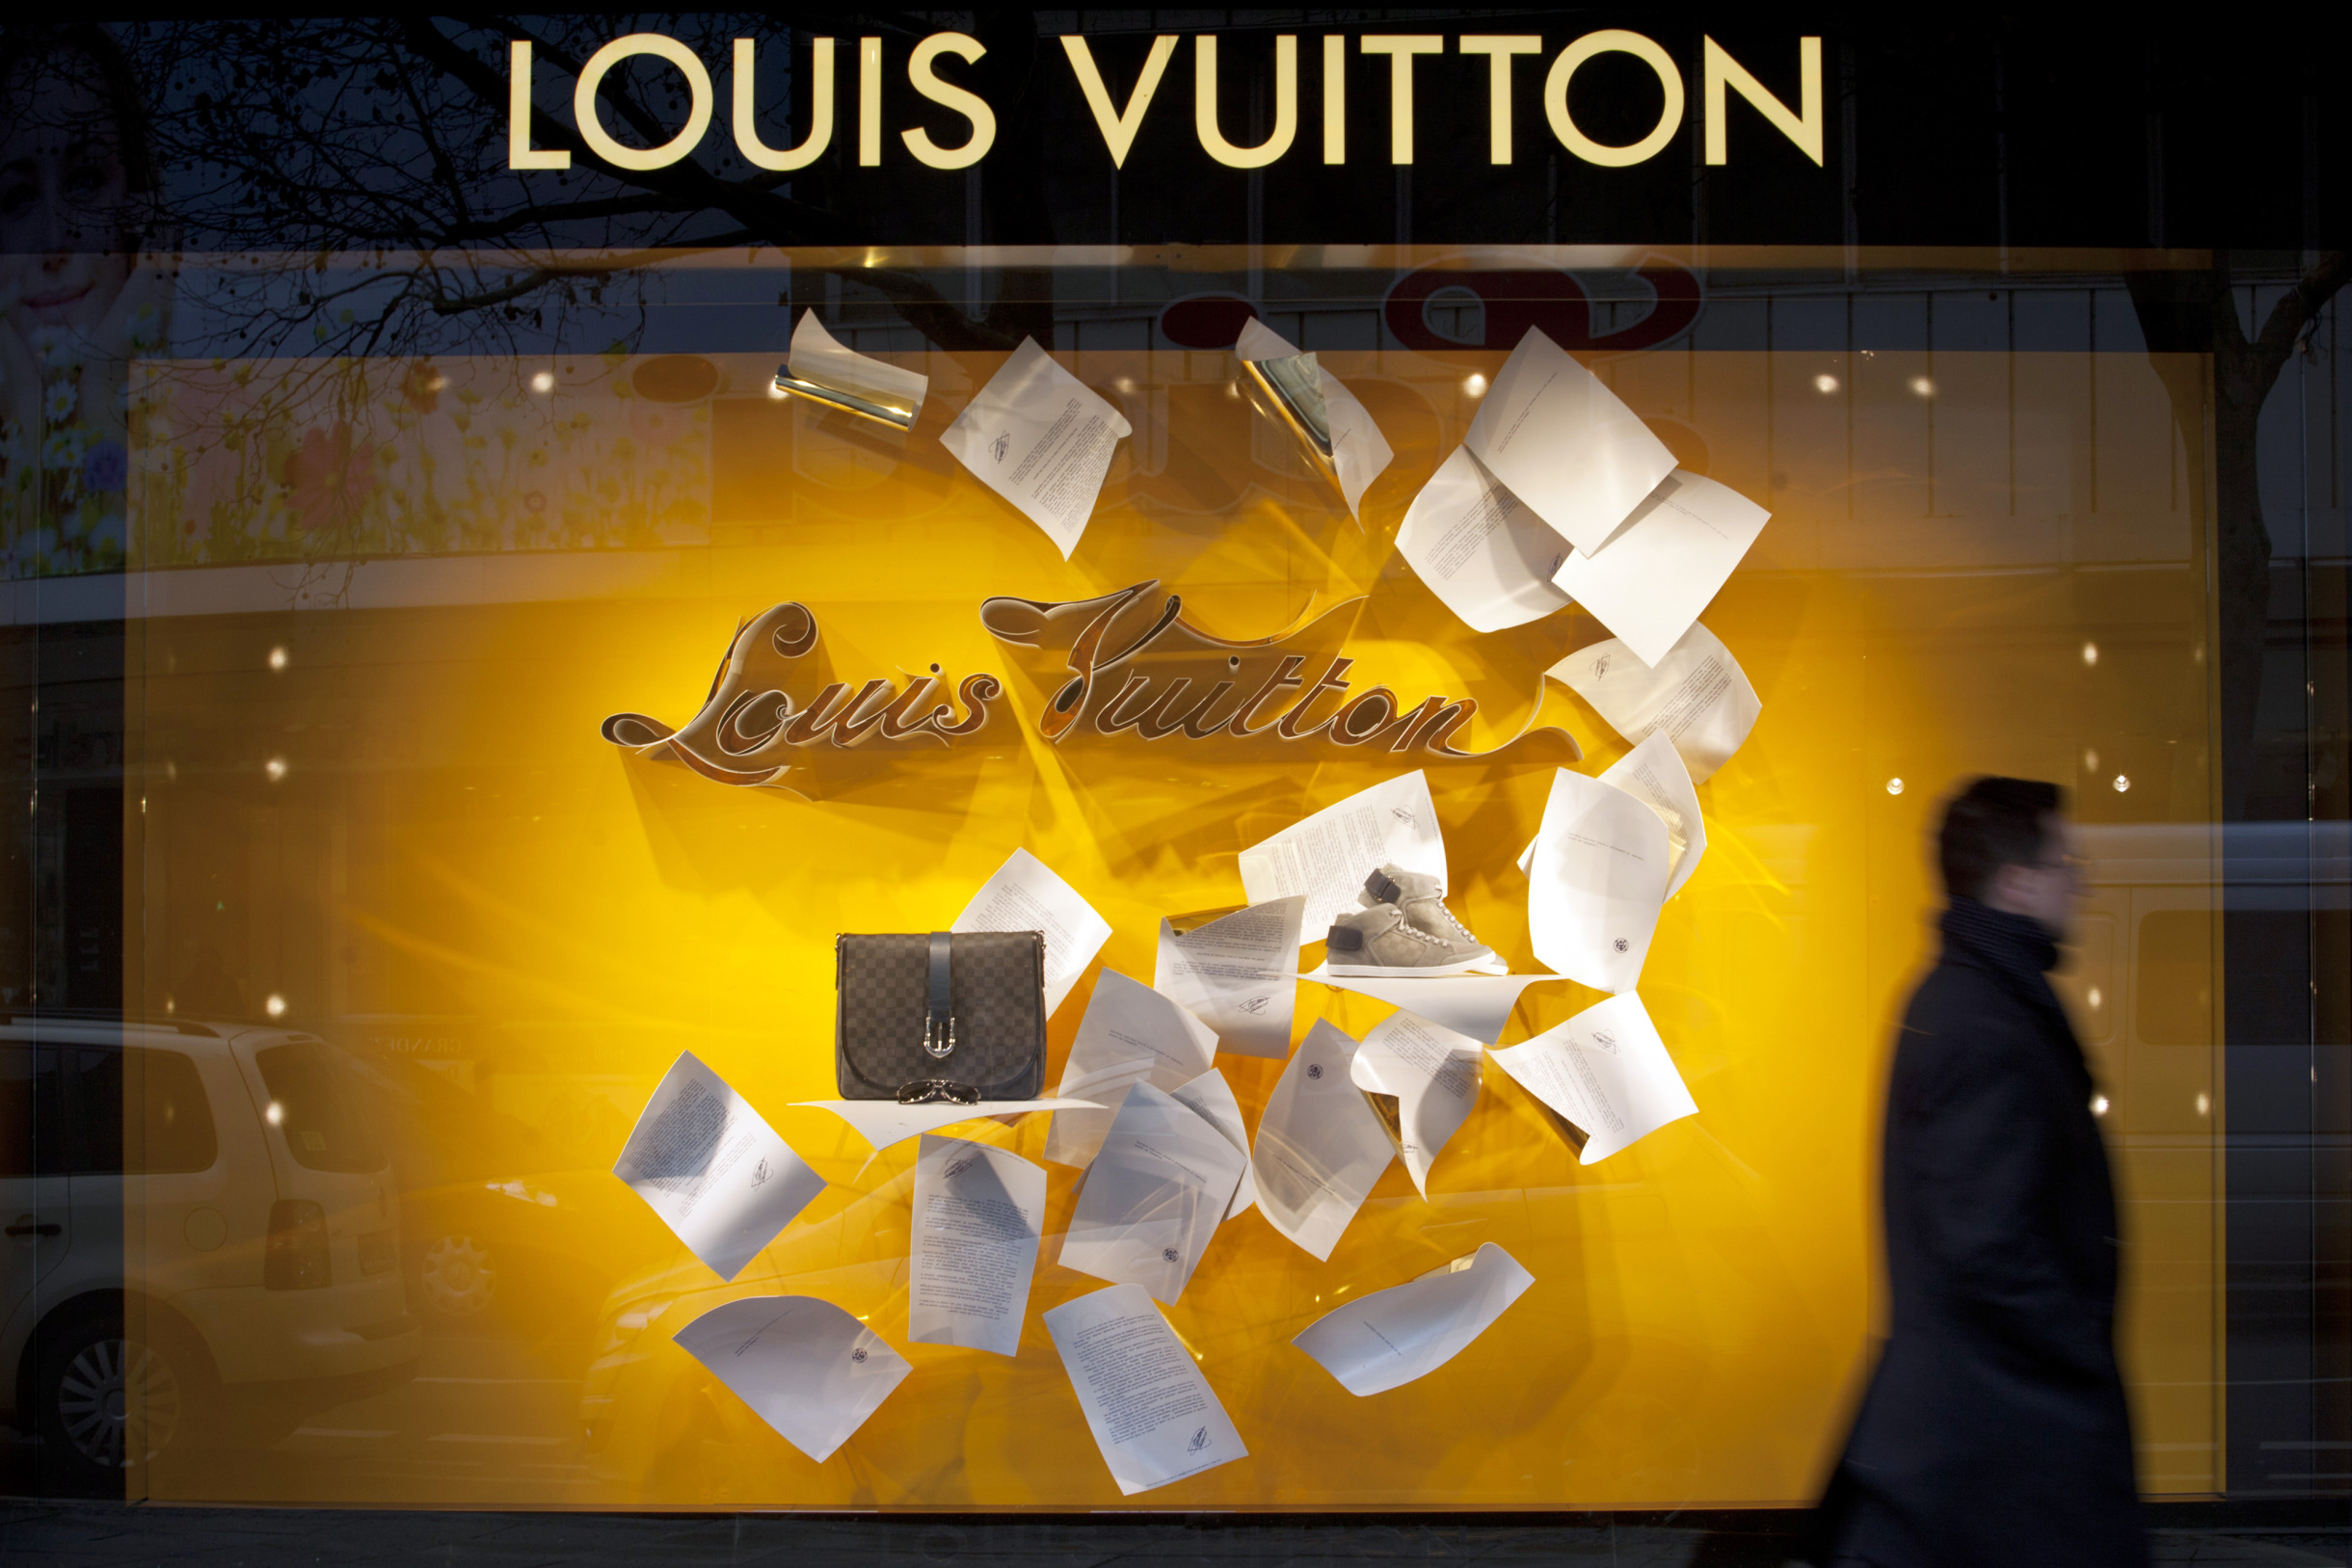 Who was Gaston Vuitton? - Malle2luxe